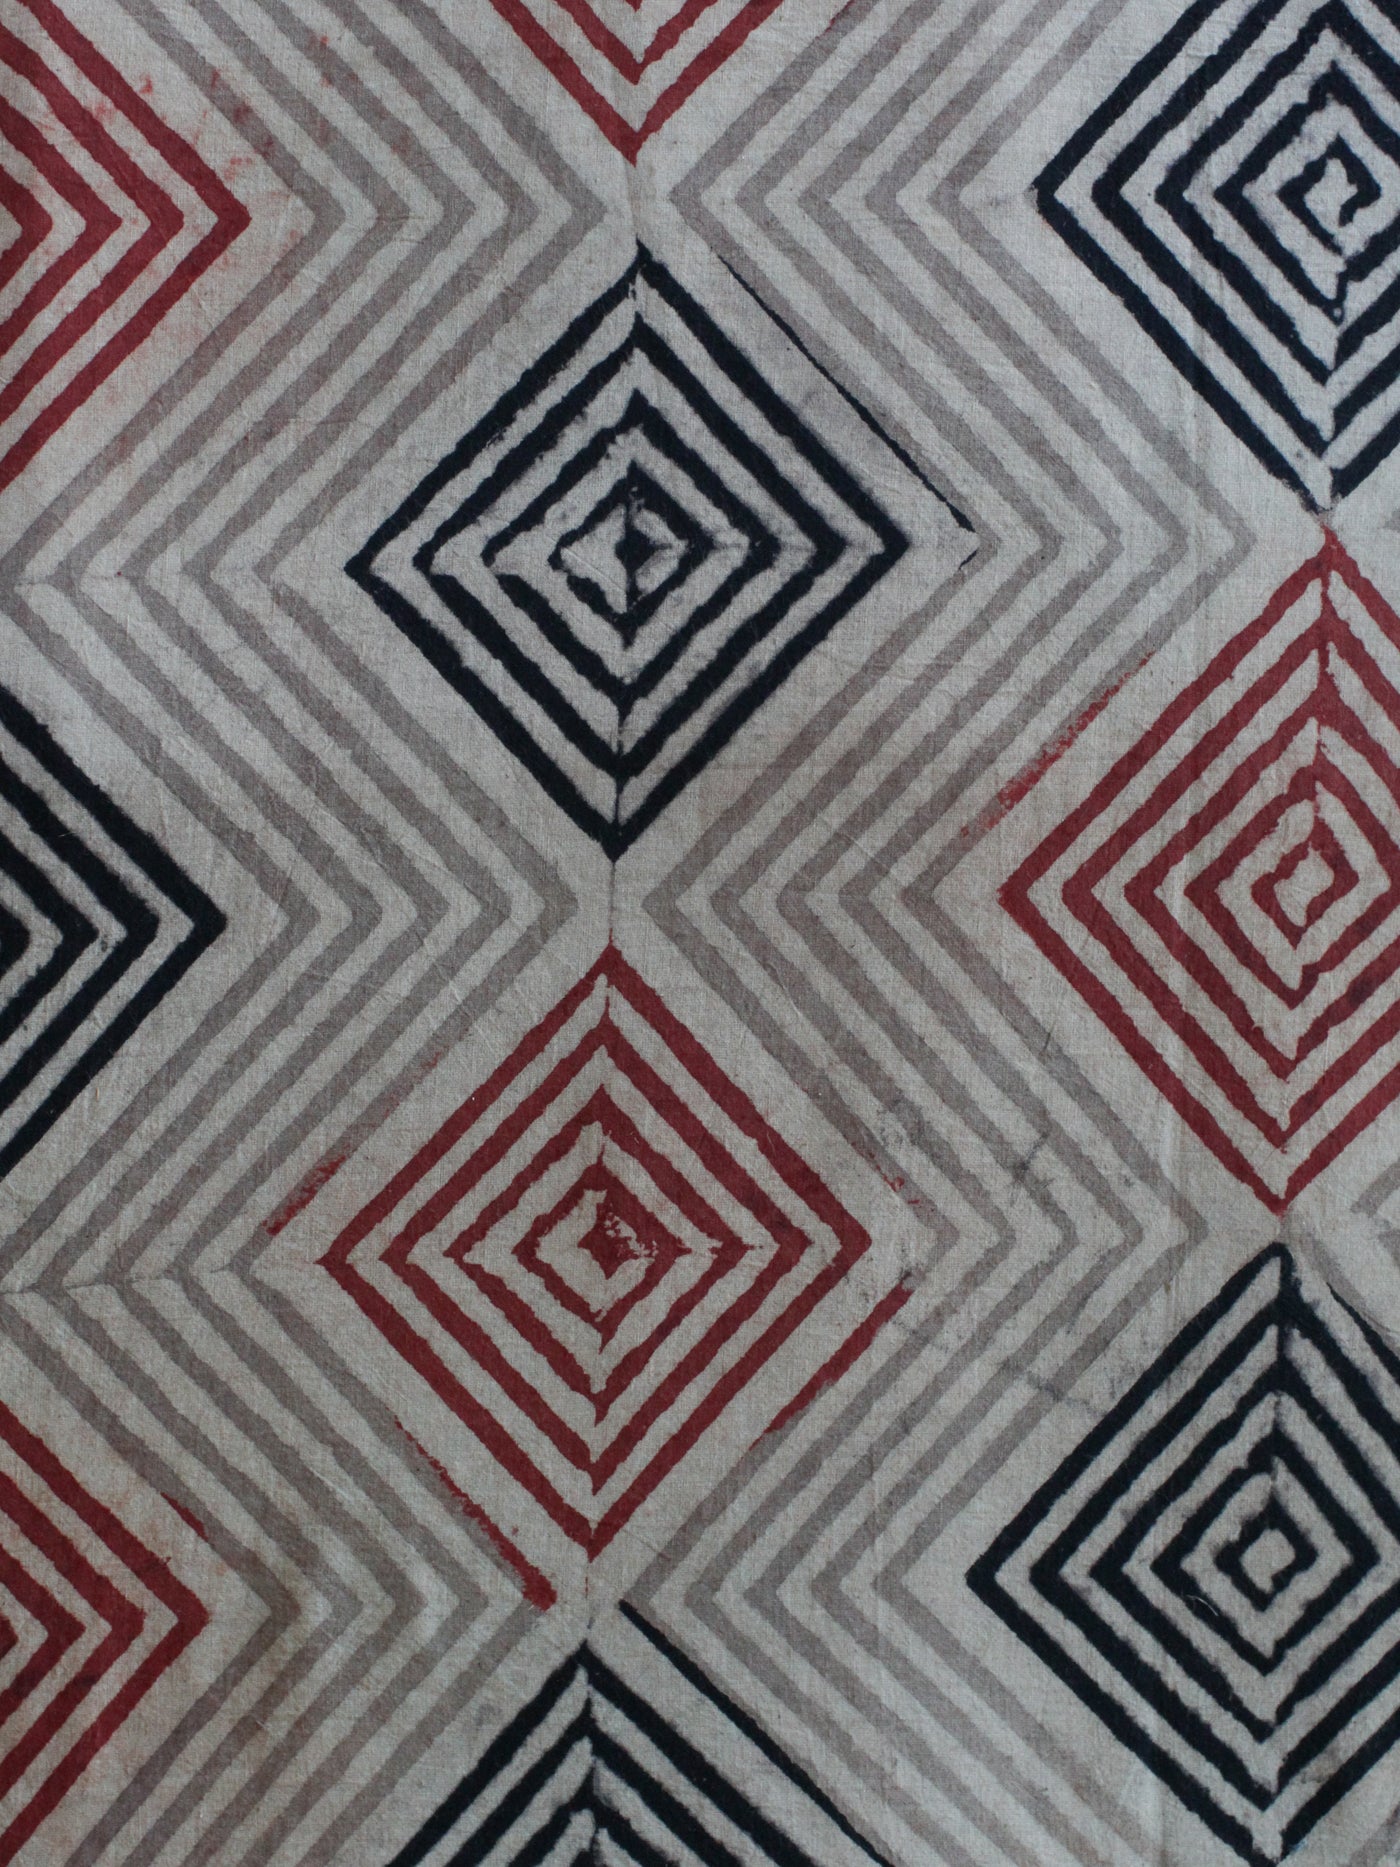 Blockprint Natural Dye Fabric #006 - Tamarind Clay